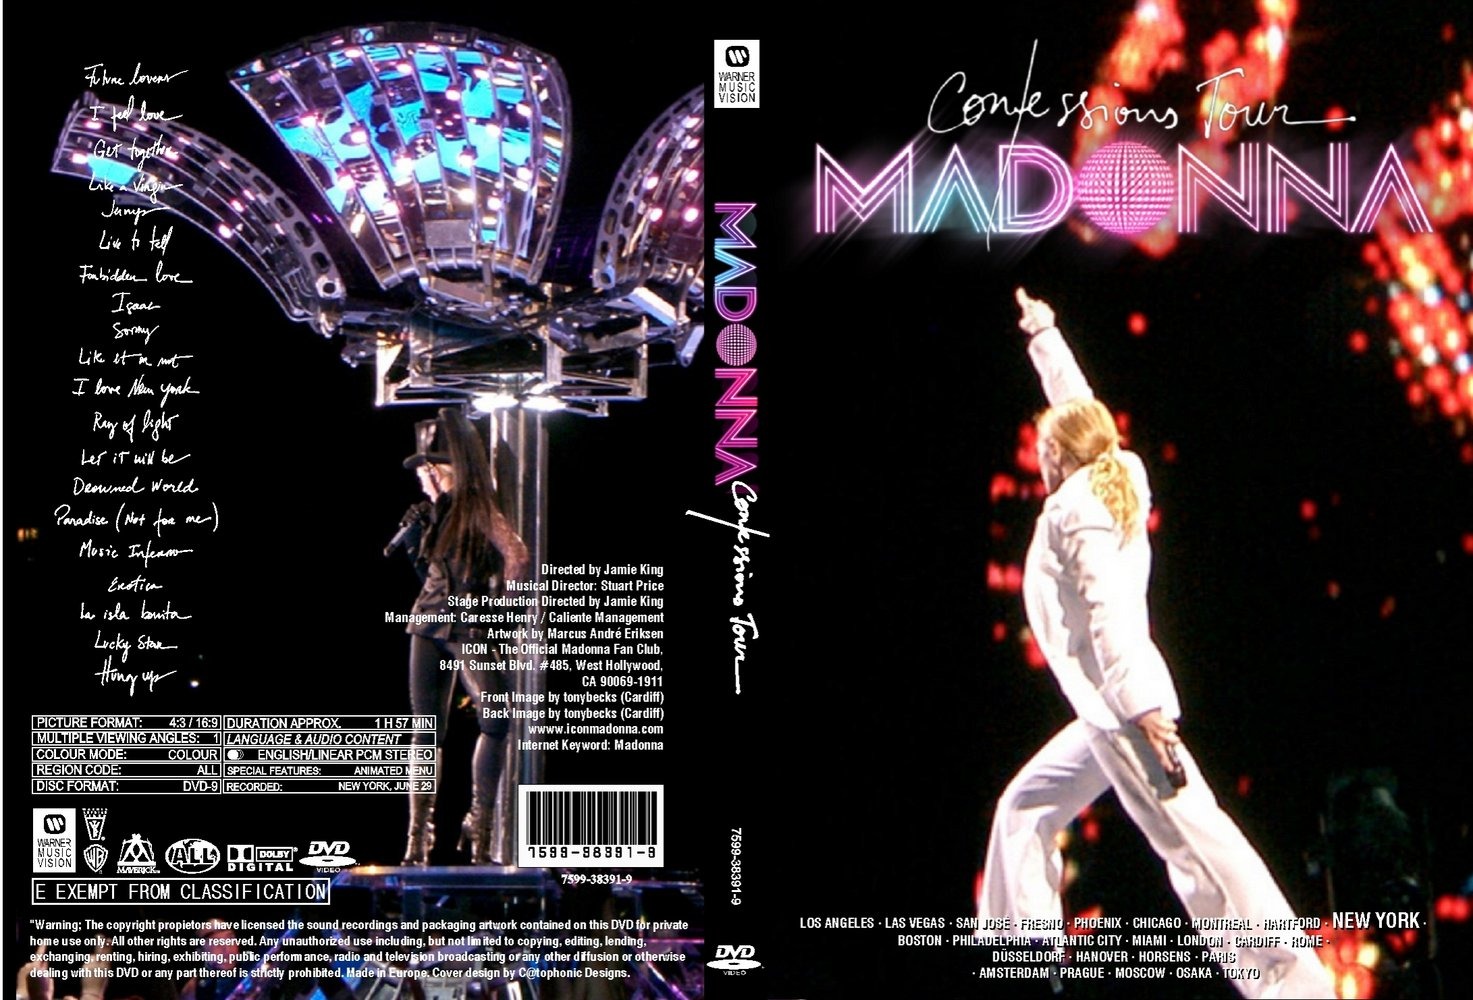 http://4.bp.blogspot.com/-oieR0mxaOSc/UHQ9qnSBClI/AAAAAAAAEz4/CwGlgsXlxLY/s1600/Madonna+The+Confessions+Tour.jpg